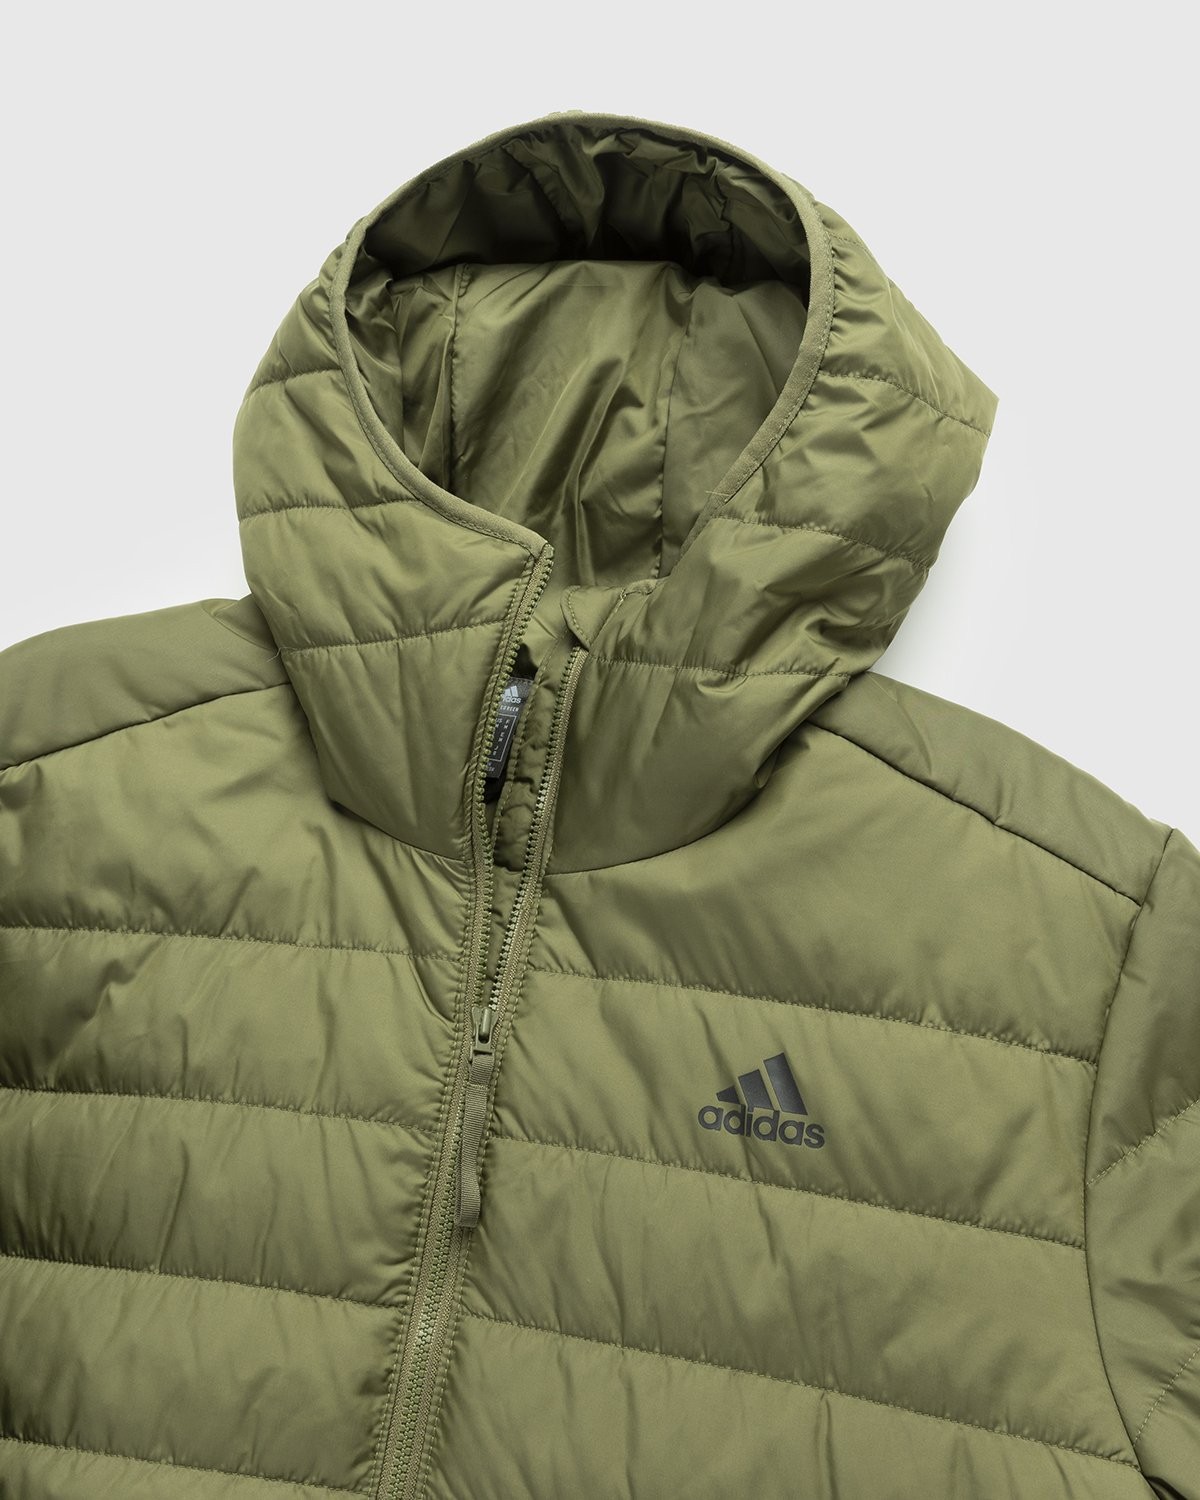 Adidas – Itavic 3-Stripes Midweight Hooded Jacket Olive | Highsnobiety Shop